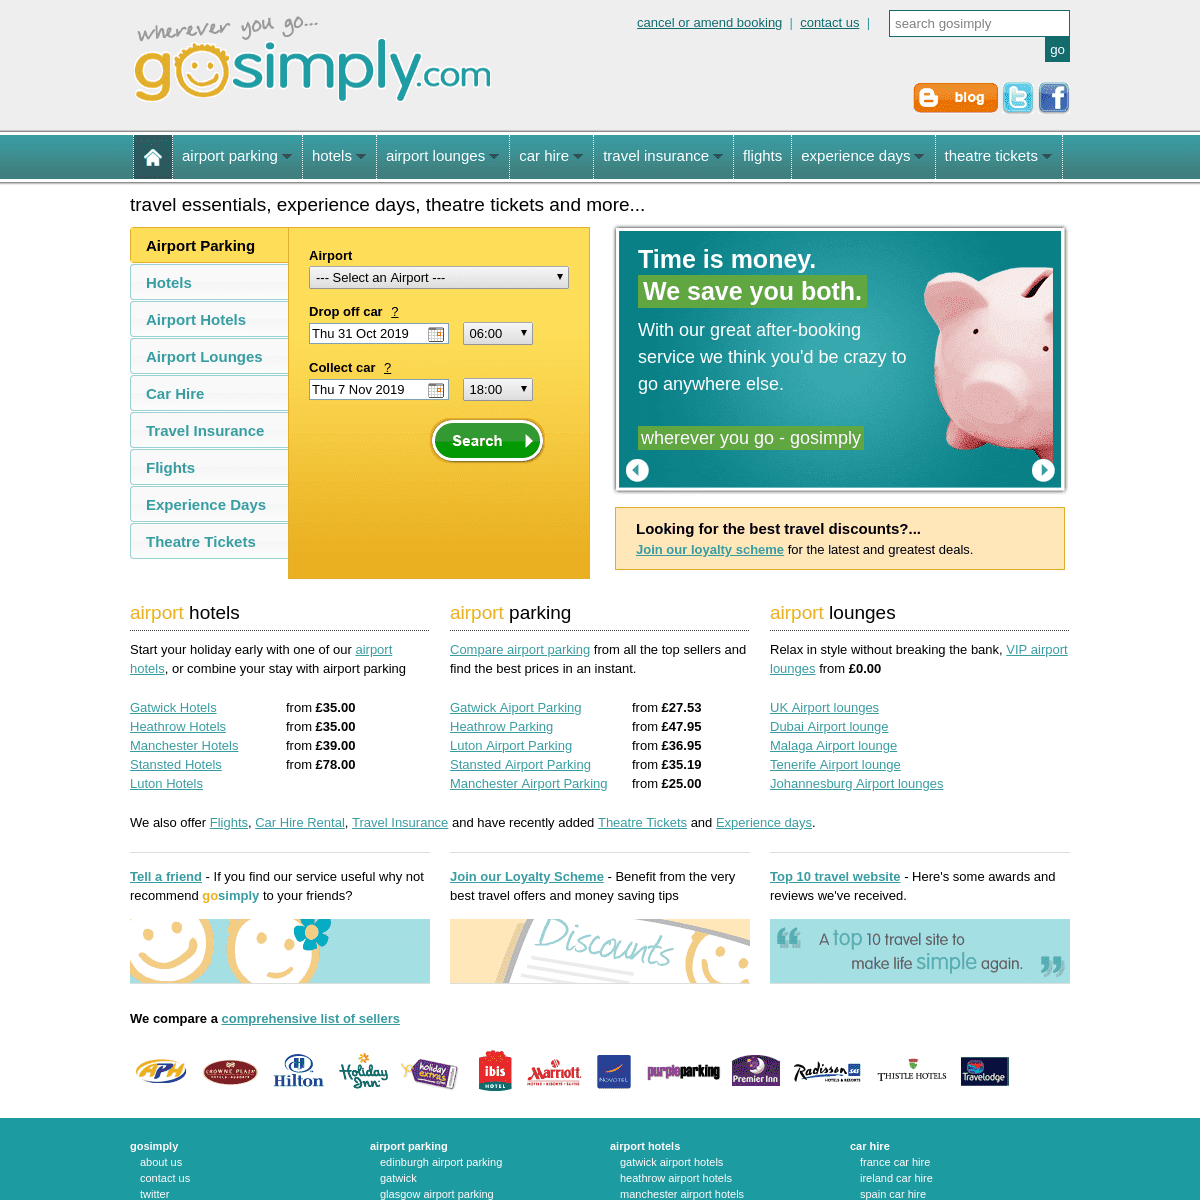 A complete backup of gosimply.com